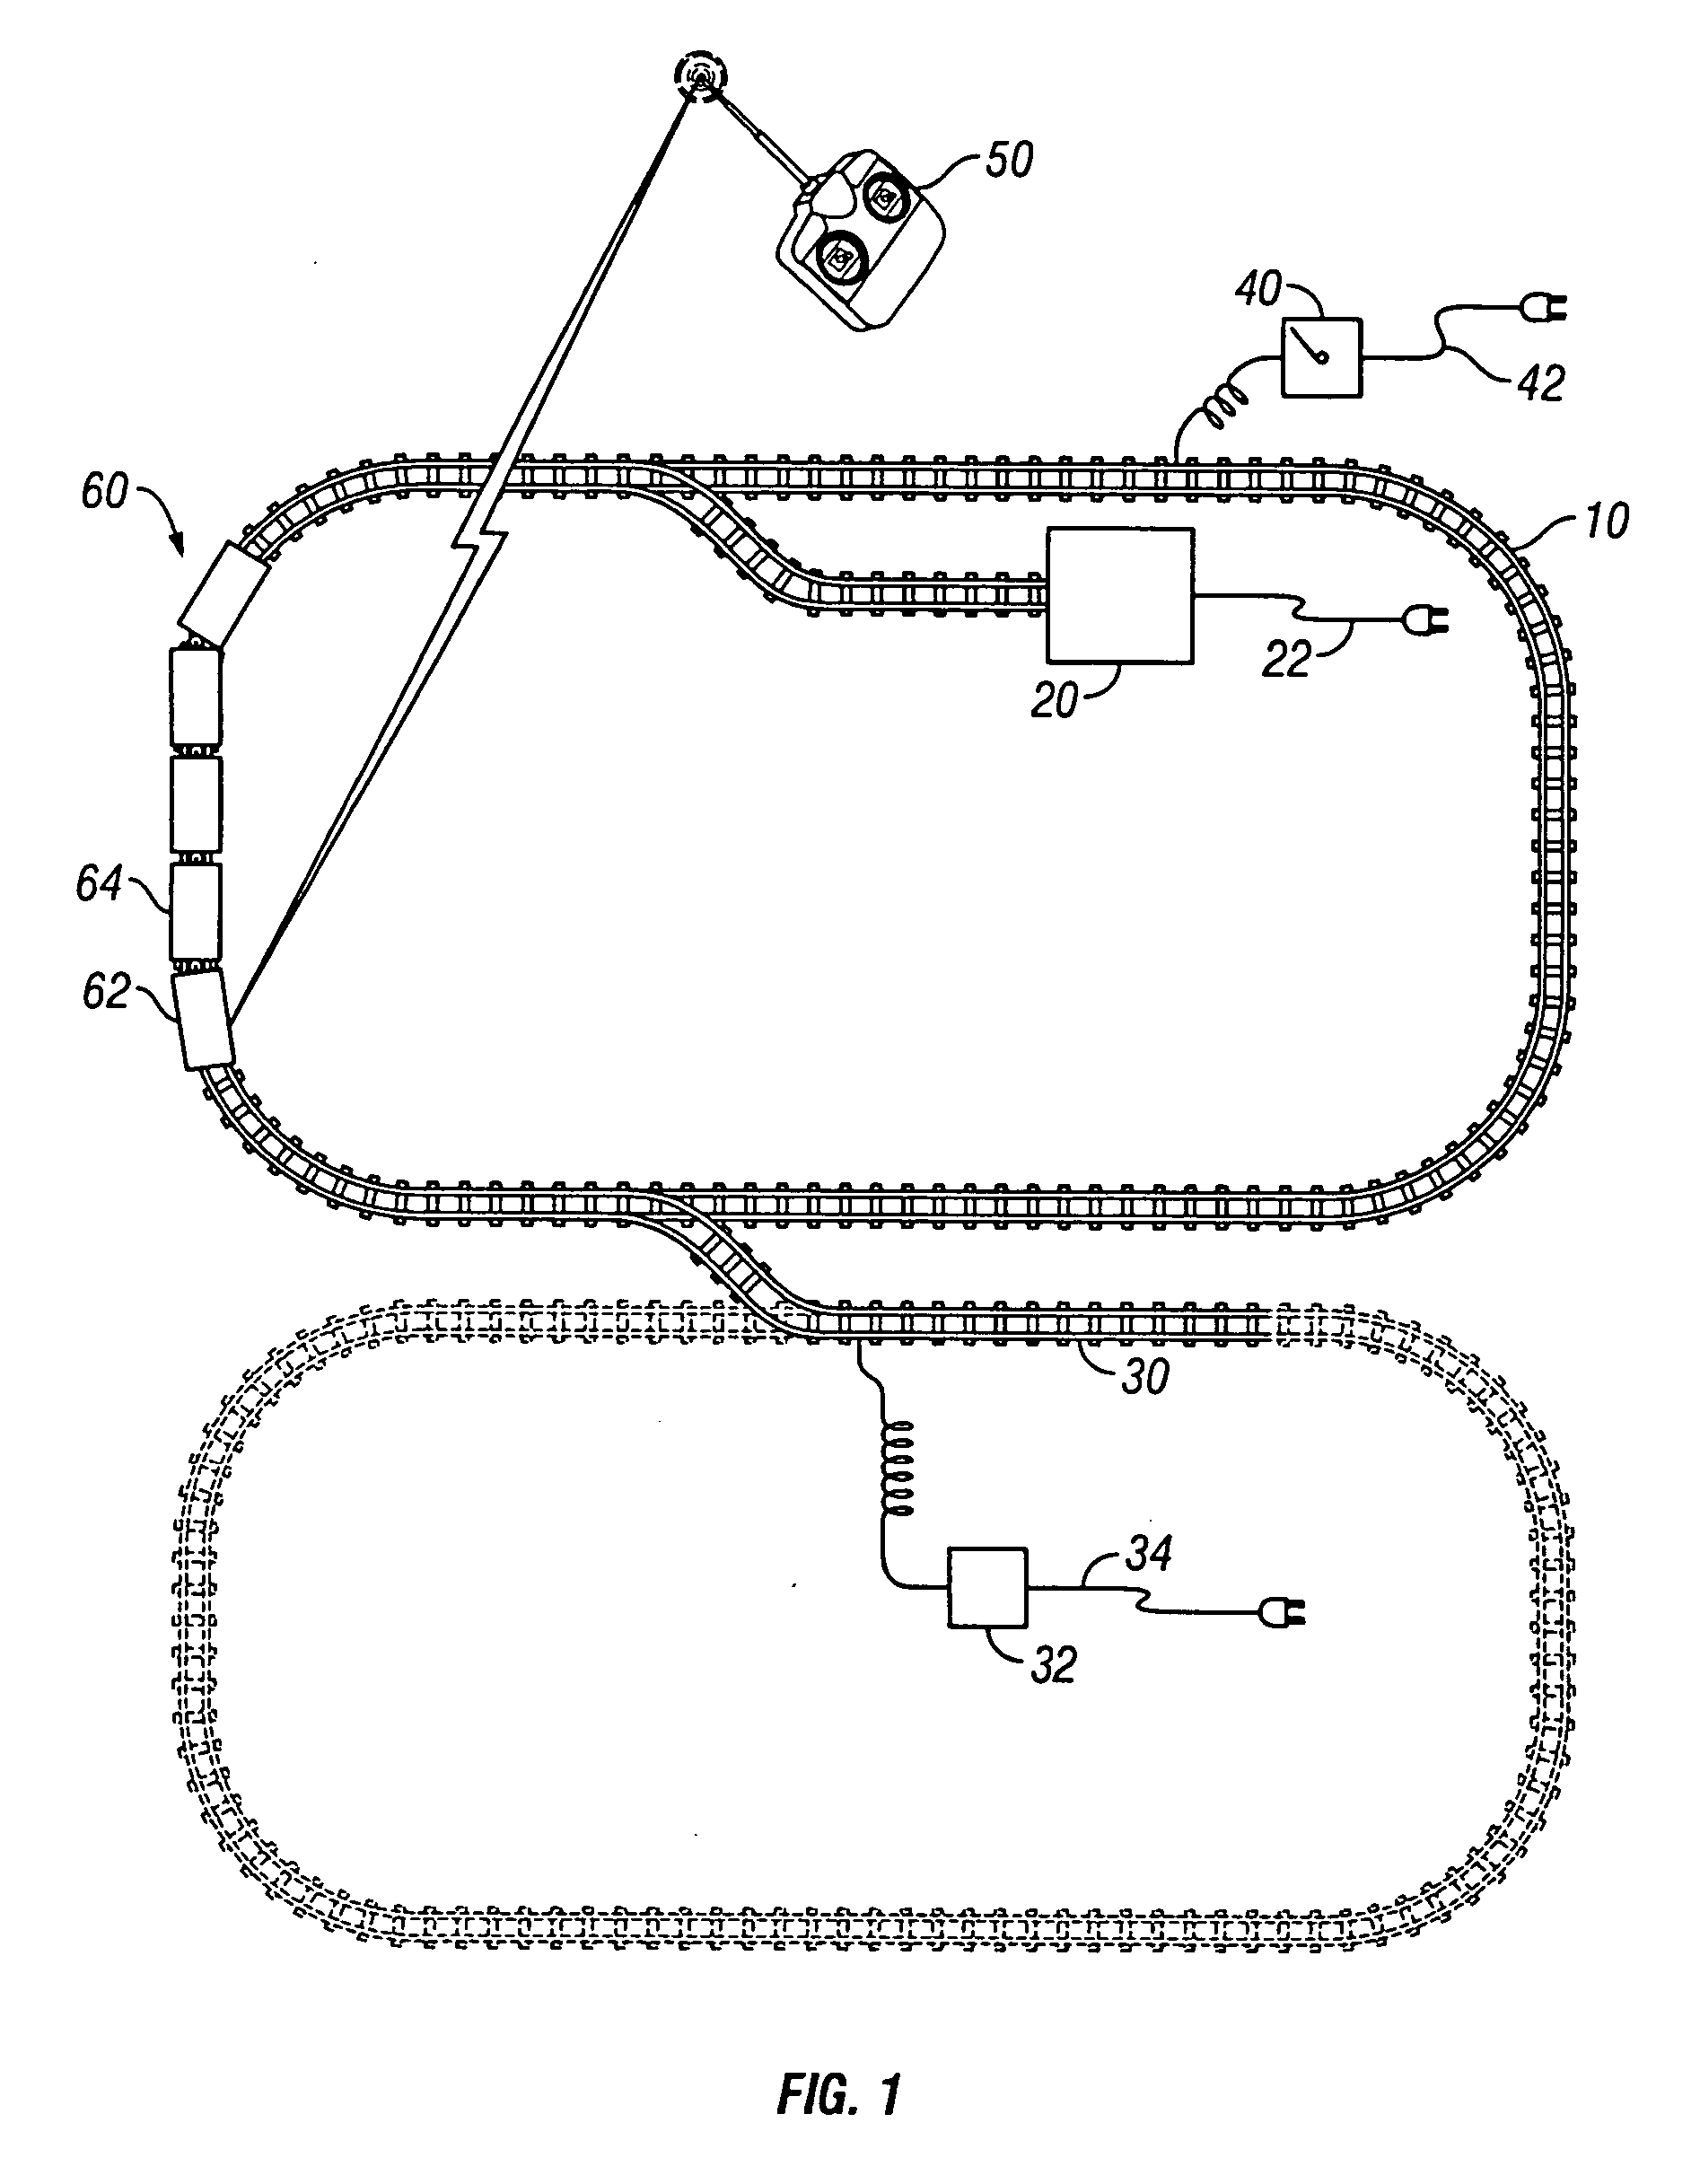 Model railroad system